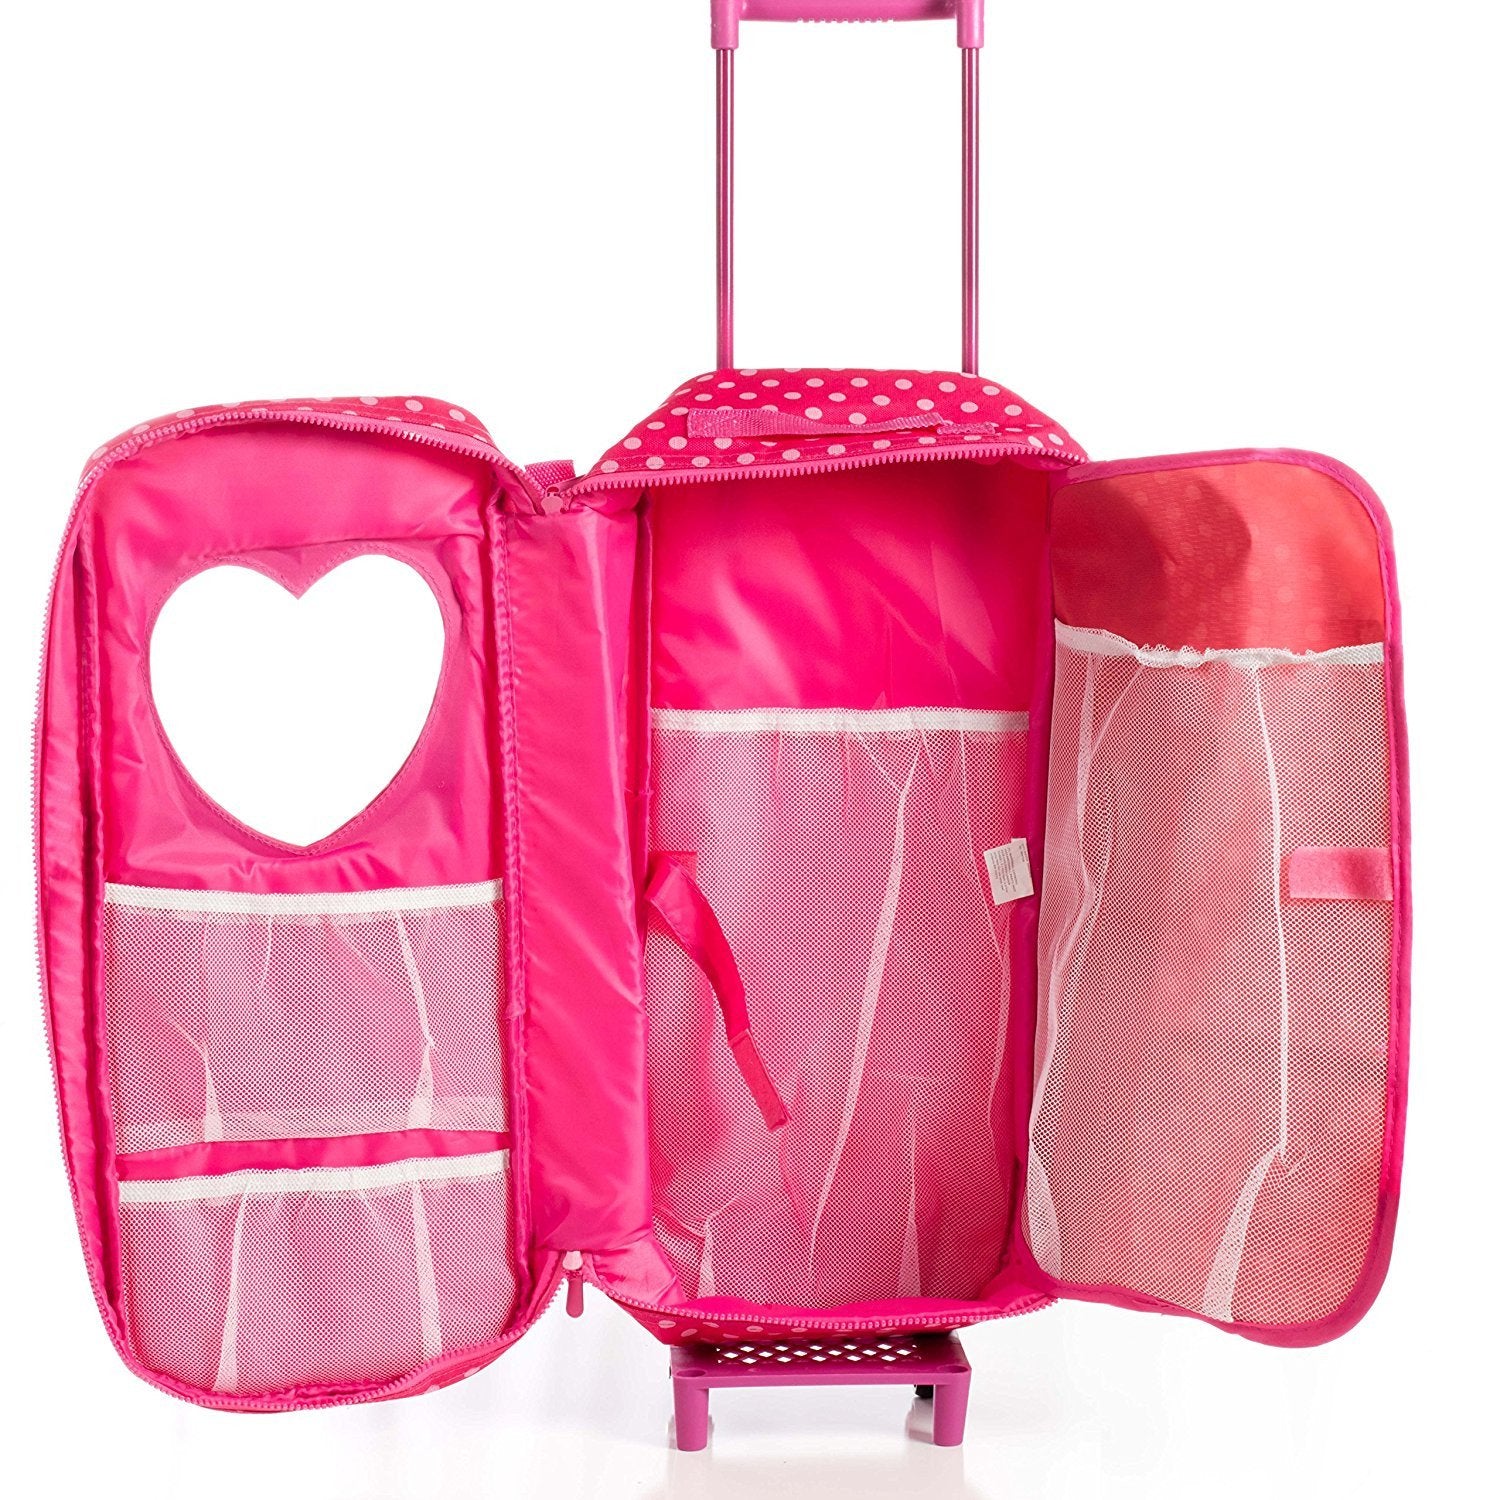 american girl doll travel luggage set